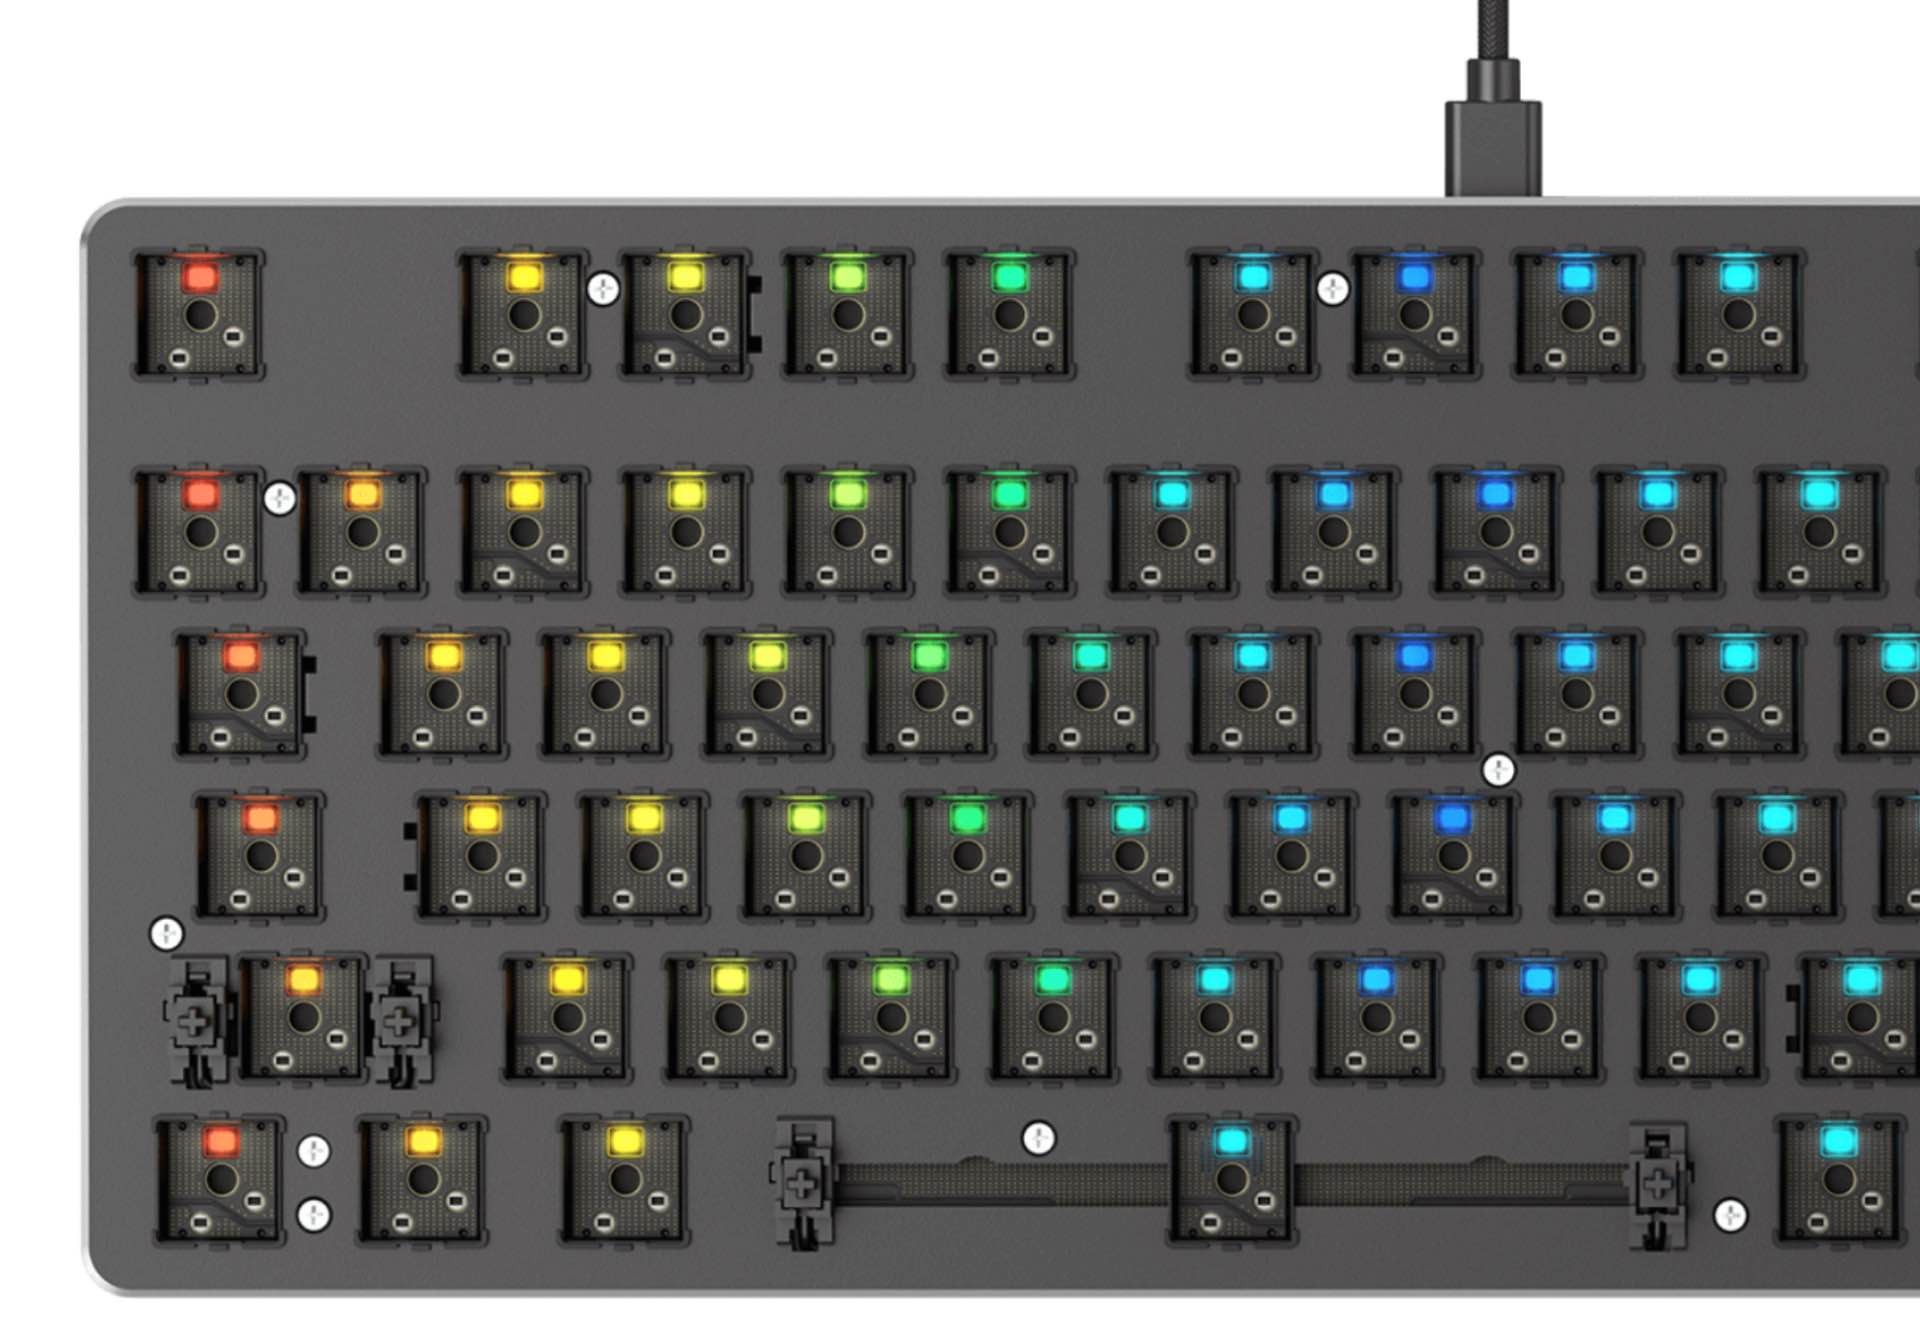 gmmk-modular-mechanical-gaming-keyboard-rgb-led-backlights